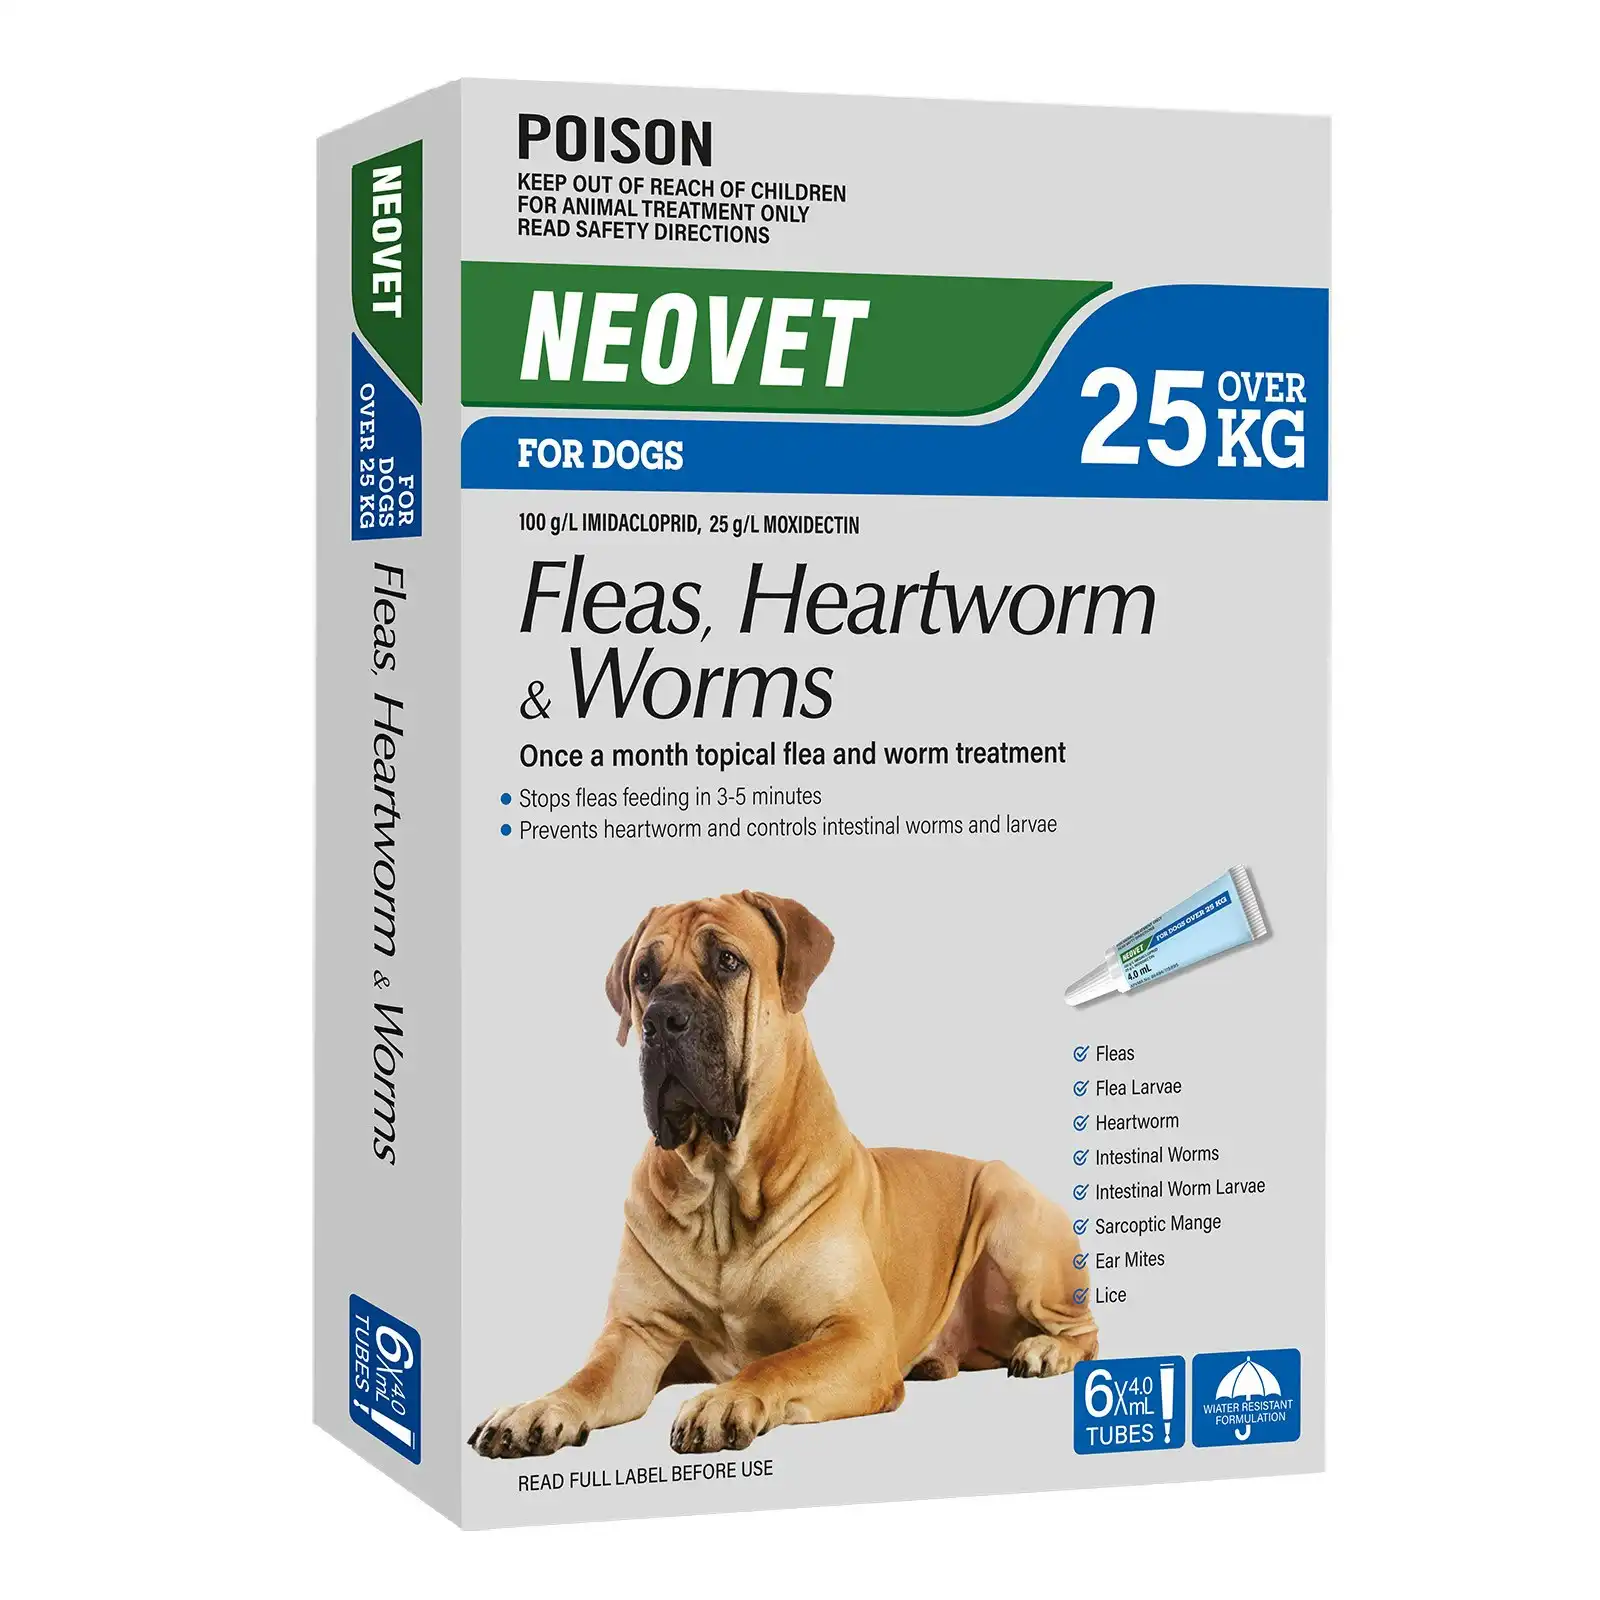 Neovet for Dogs Over 25 Kg (BLUE) 6 Pack